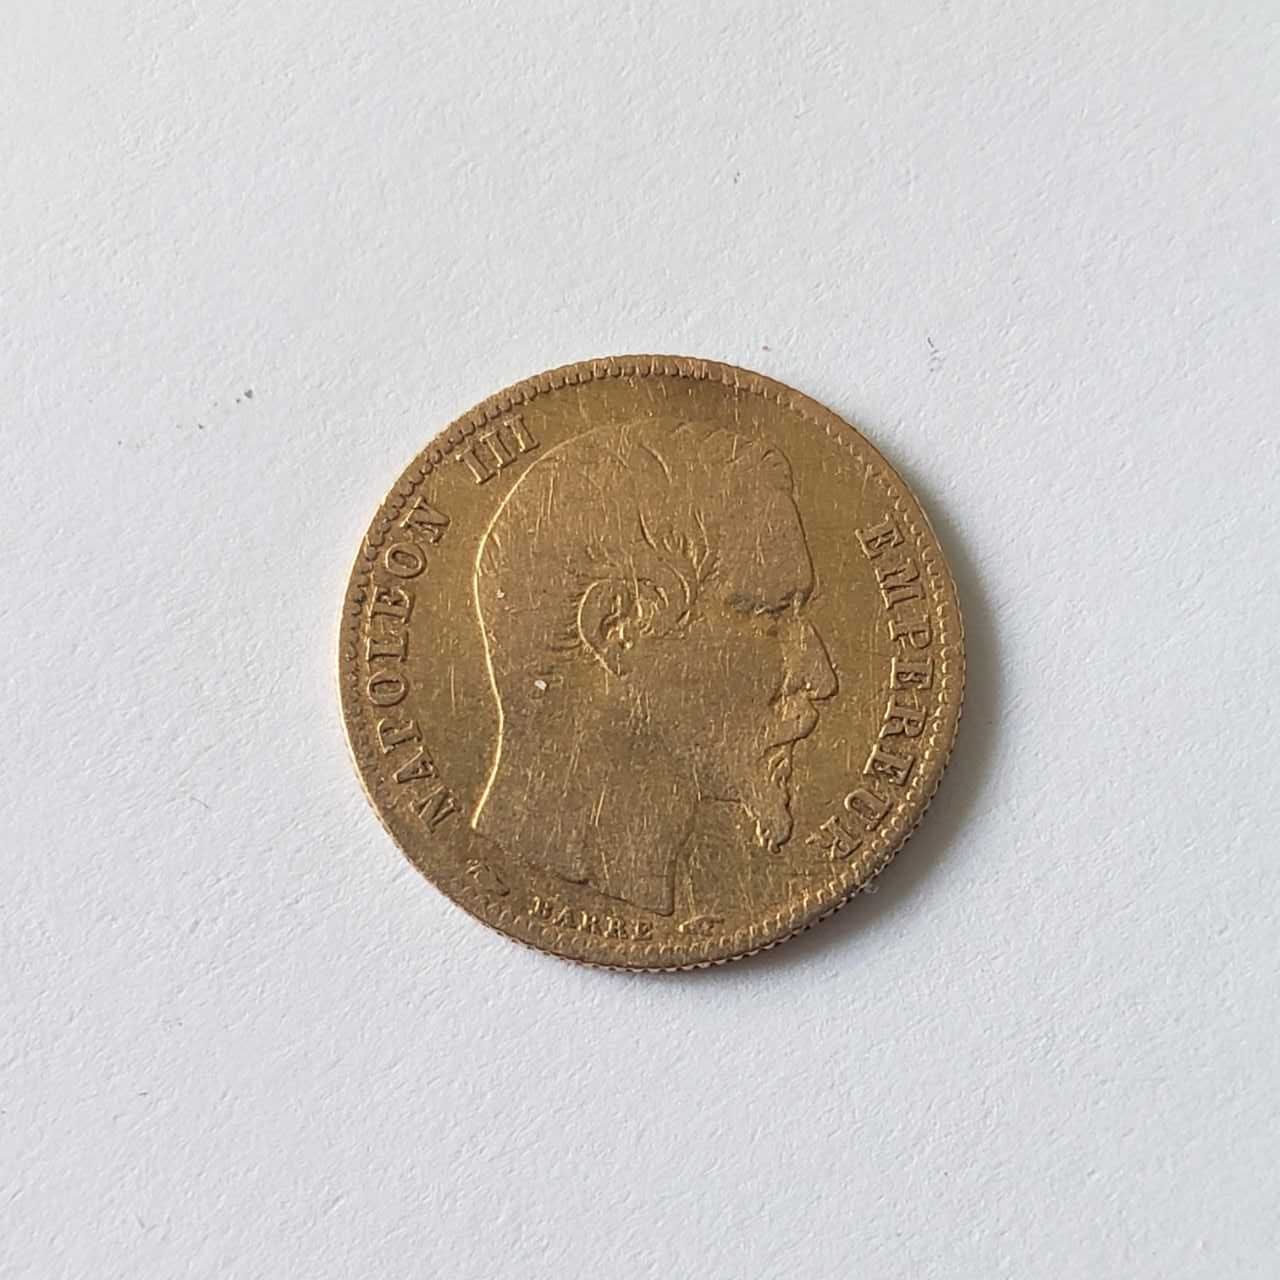 5 франков 1854 года - золотая монета